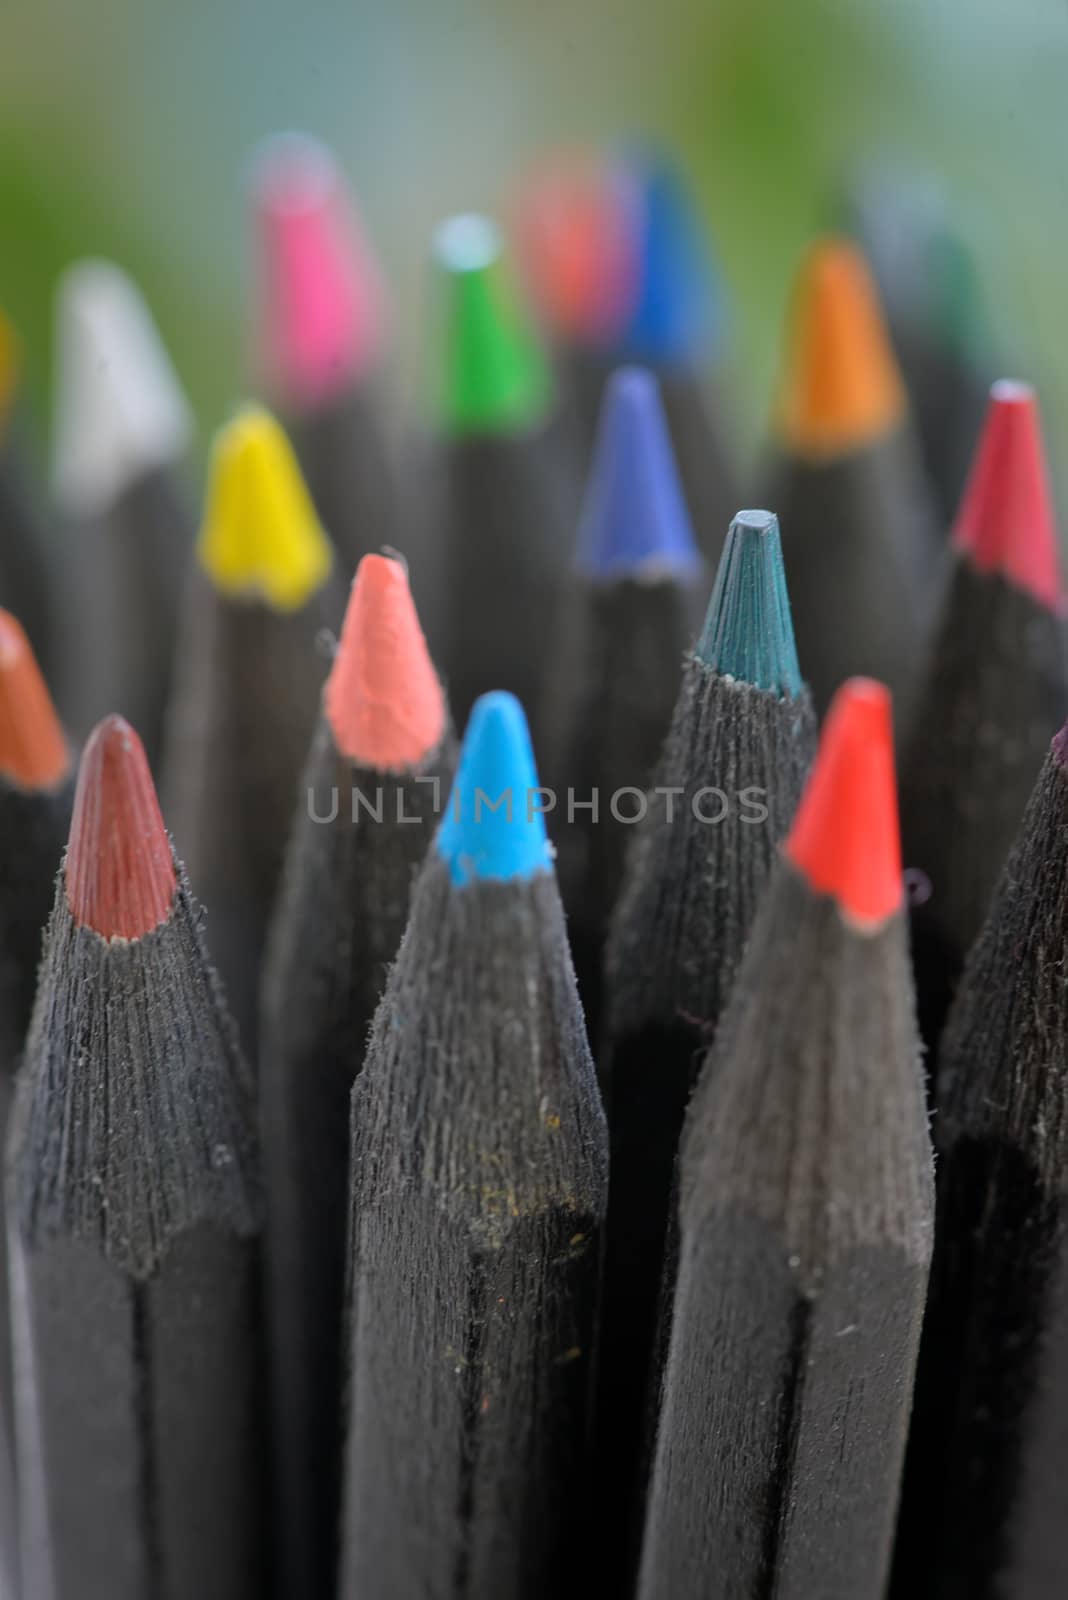 Colored  black pencils in jar